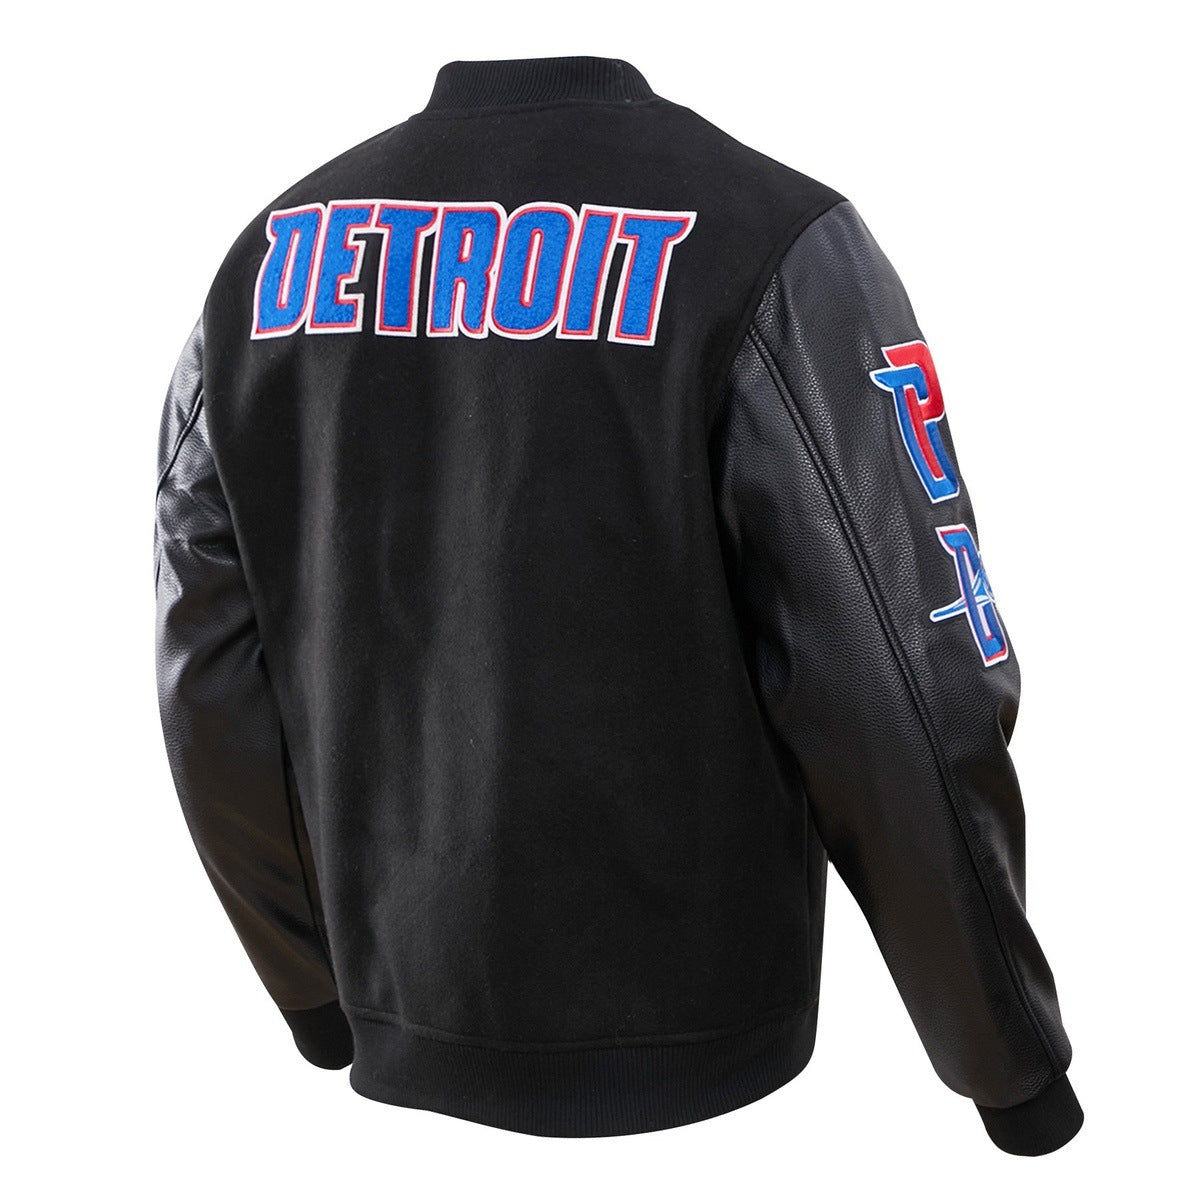 Detroit Pistons Black Varsity Jacket